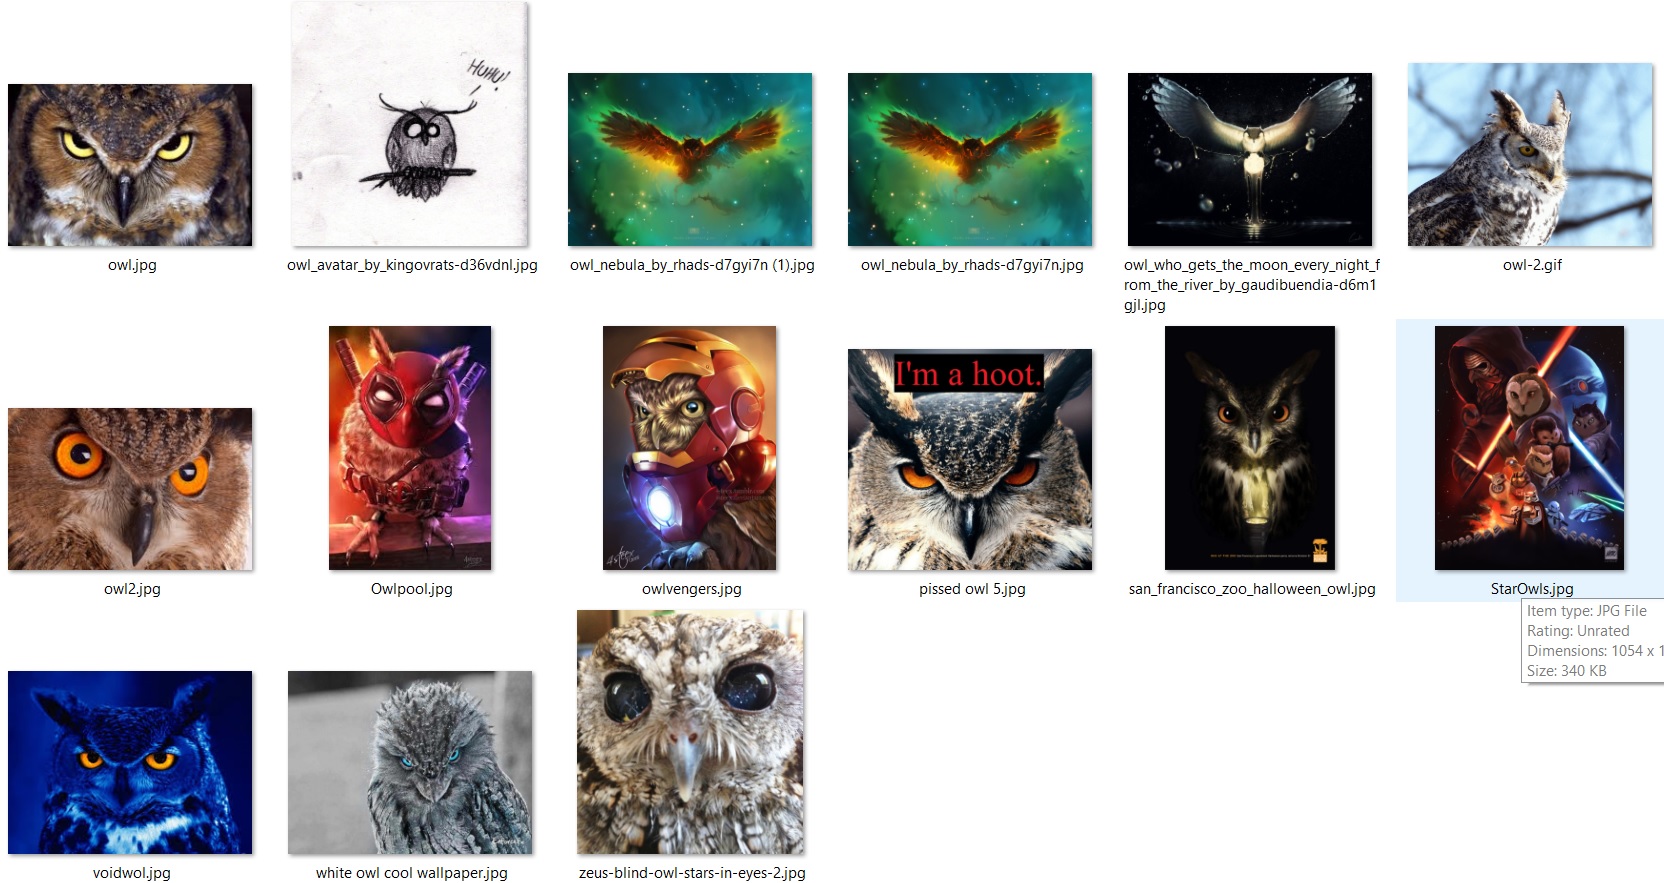 owls2.jpg